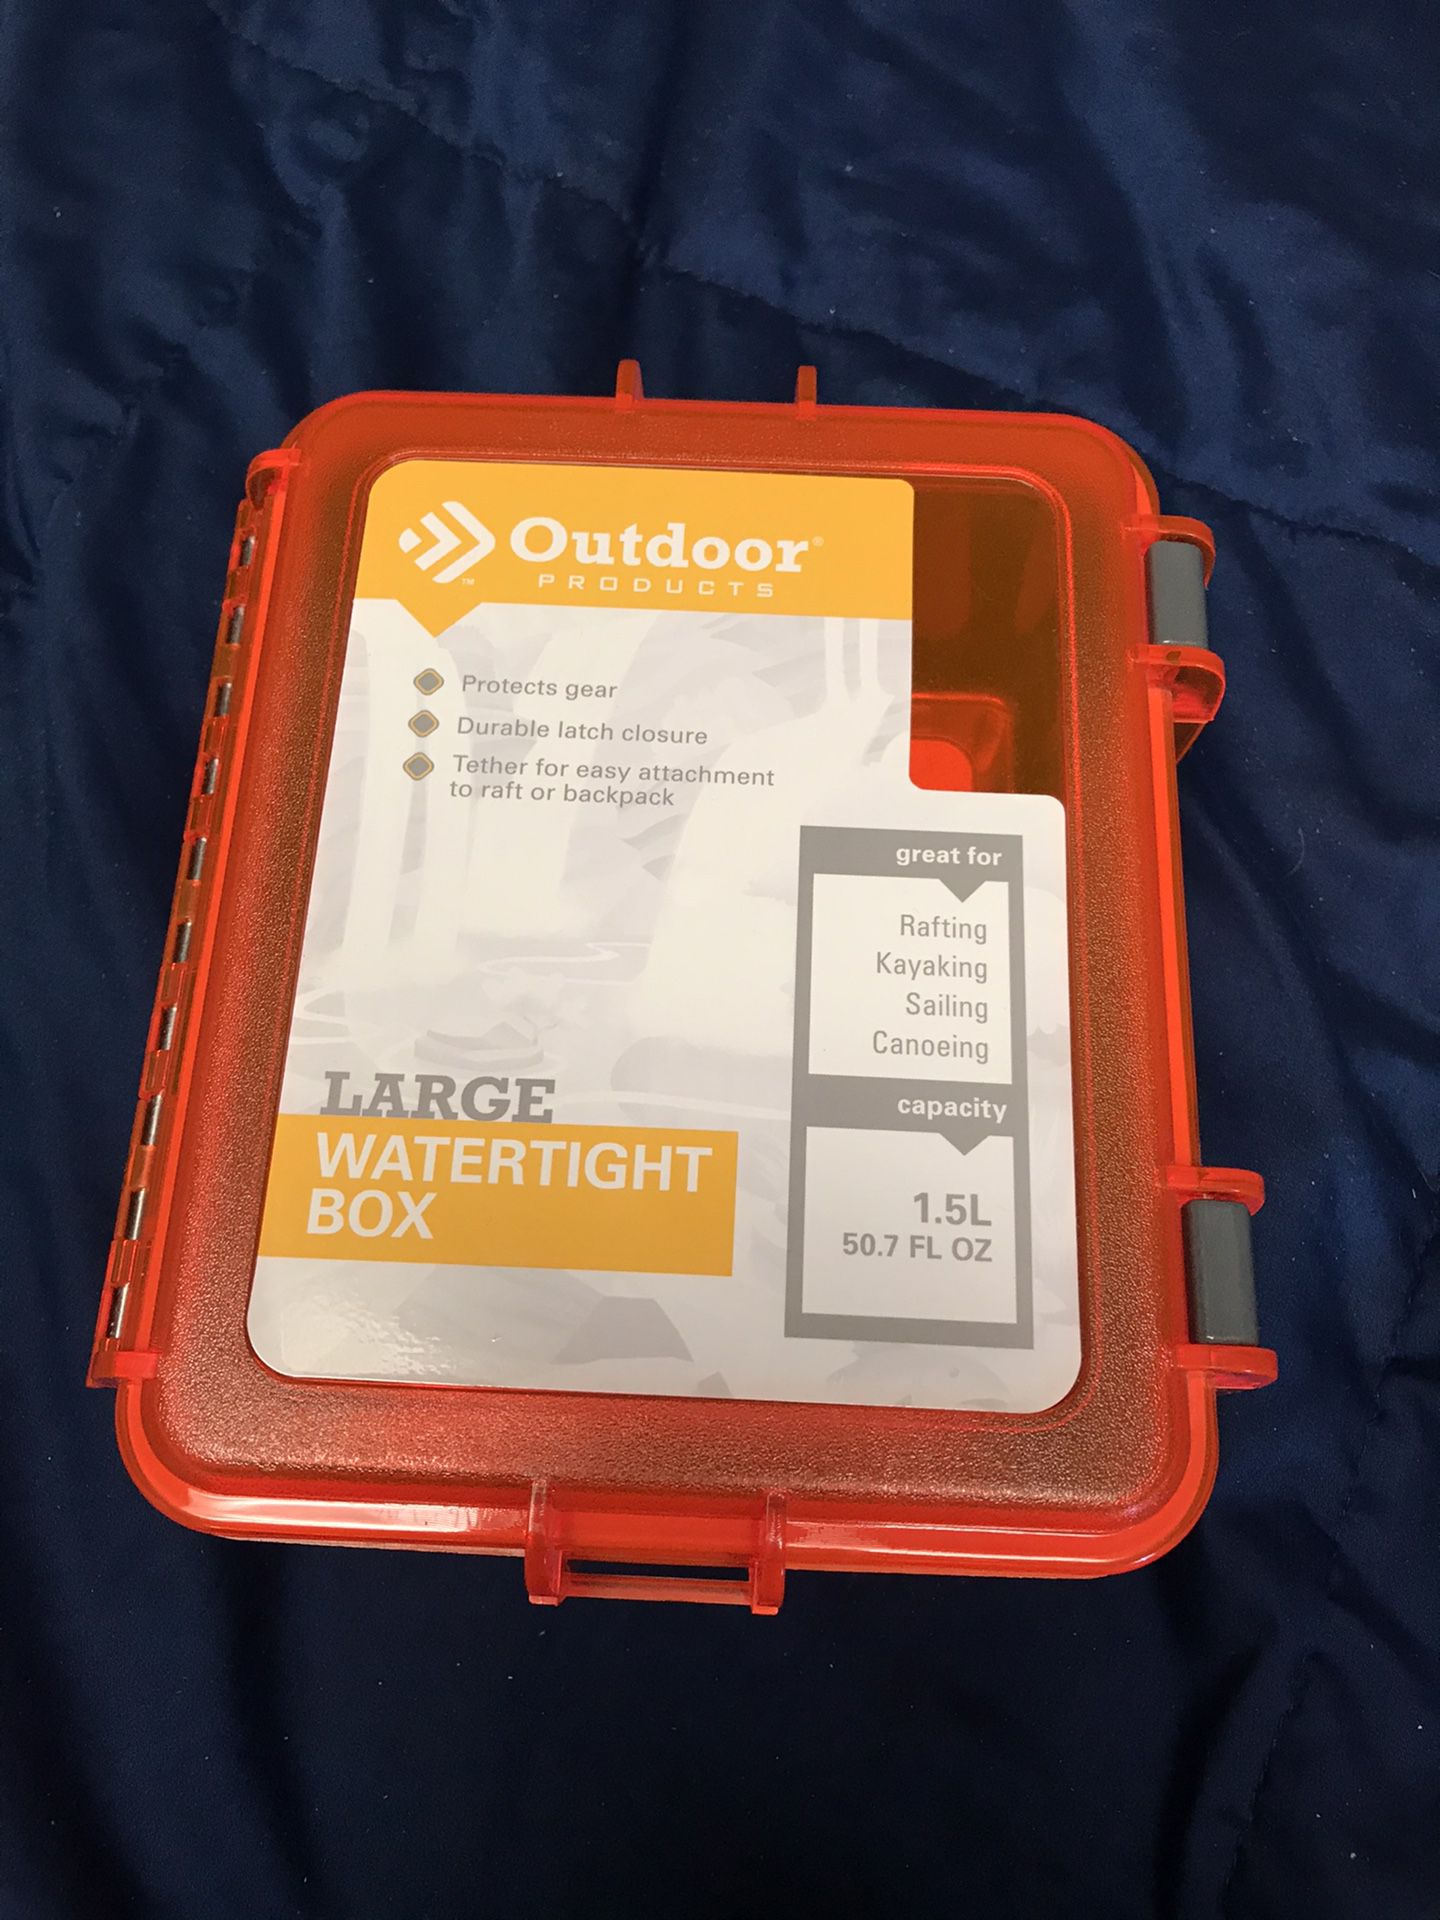 Outdoor watertight box